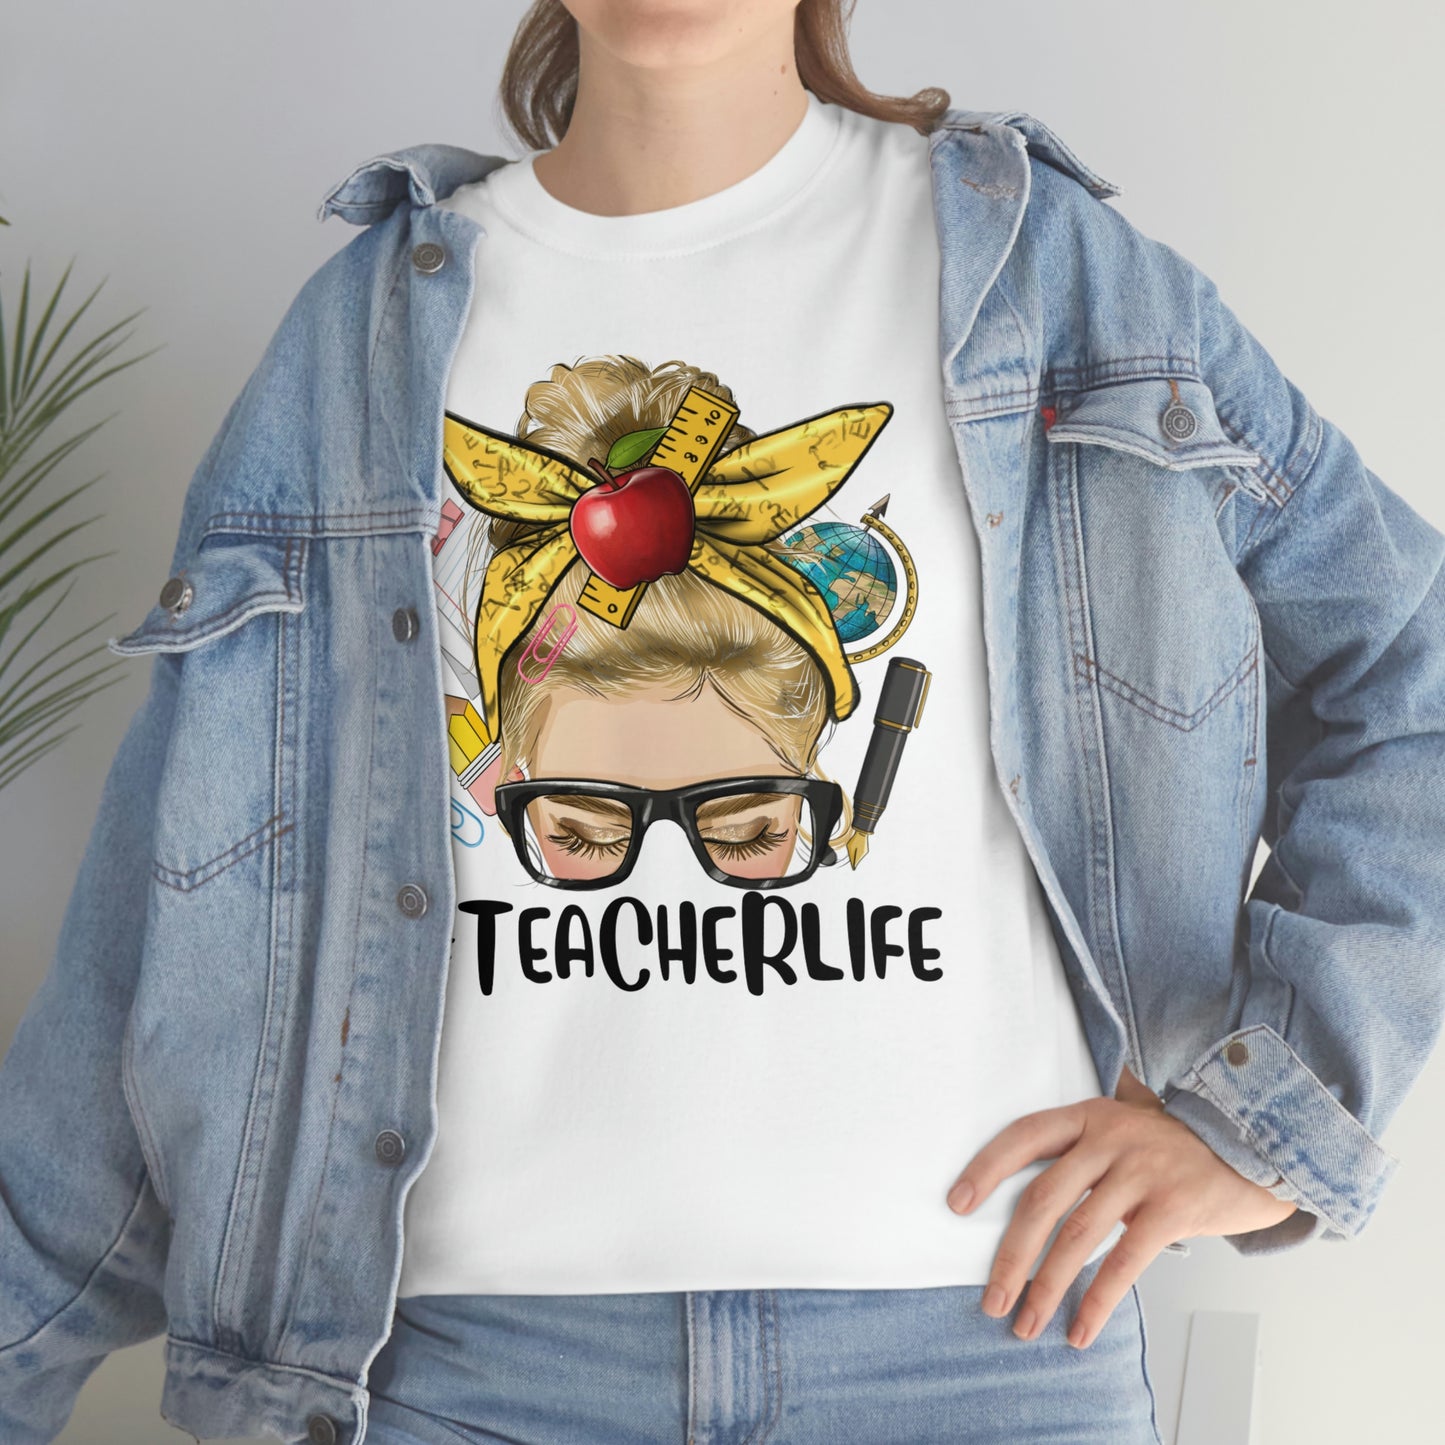 Educator Apparel (Teacher Life Tee)